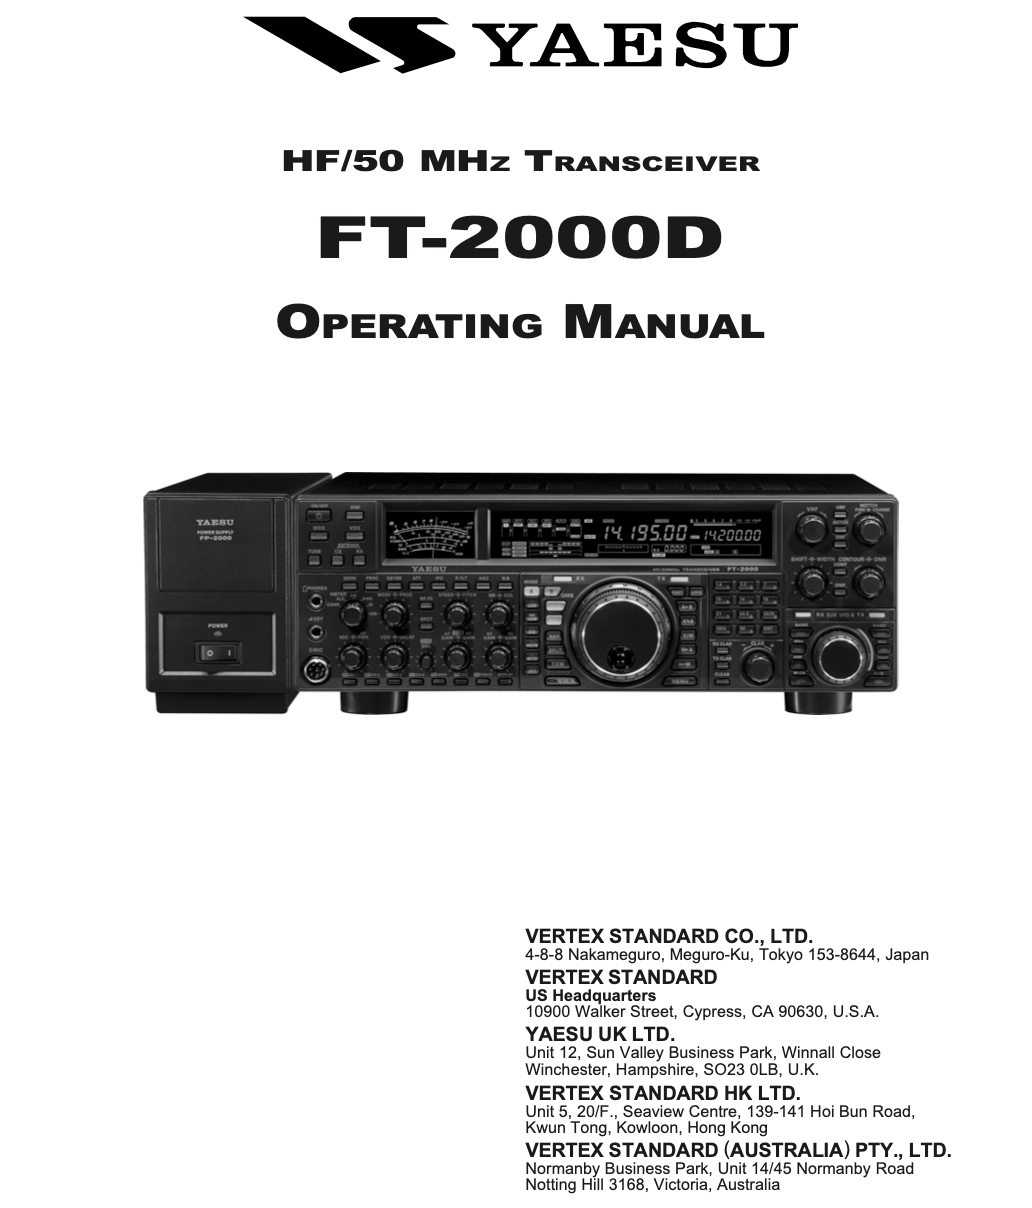 Yaesu FT-2000D Instruction Manual